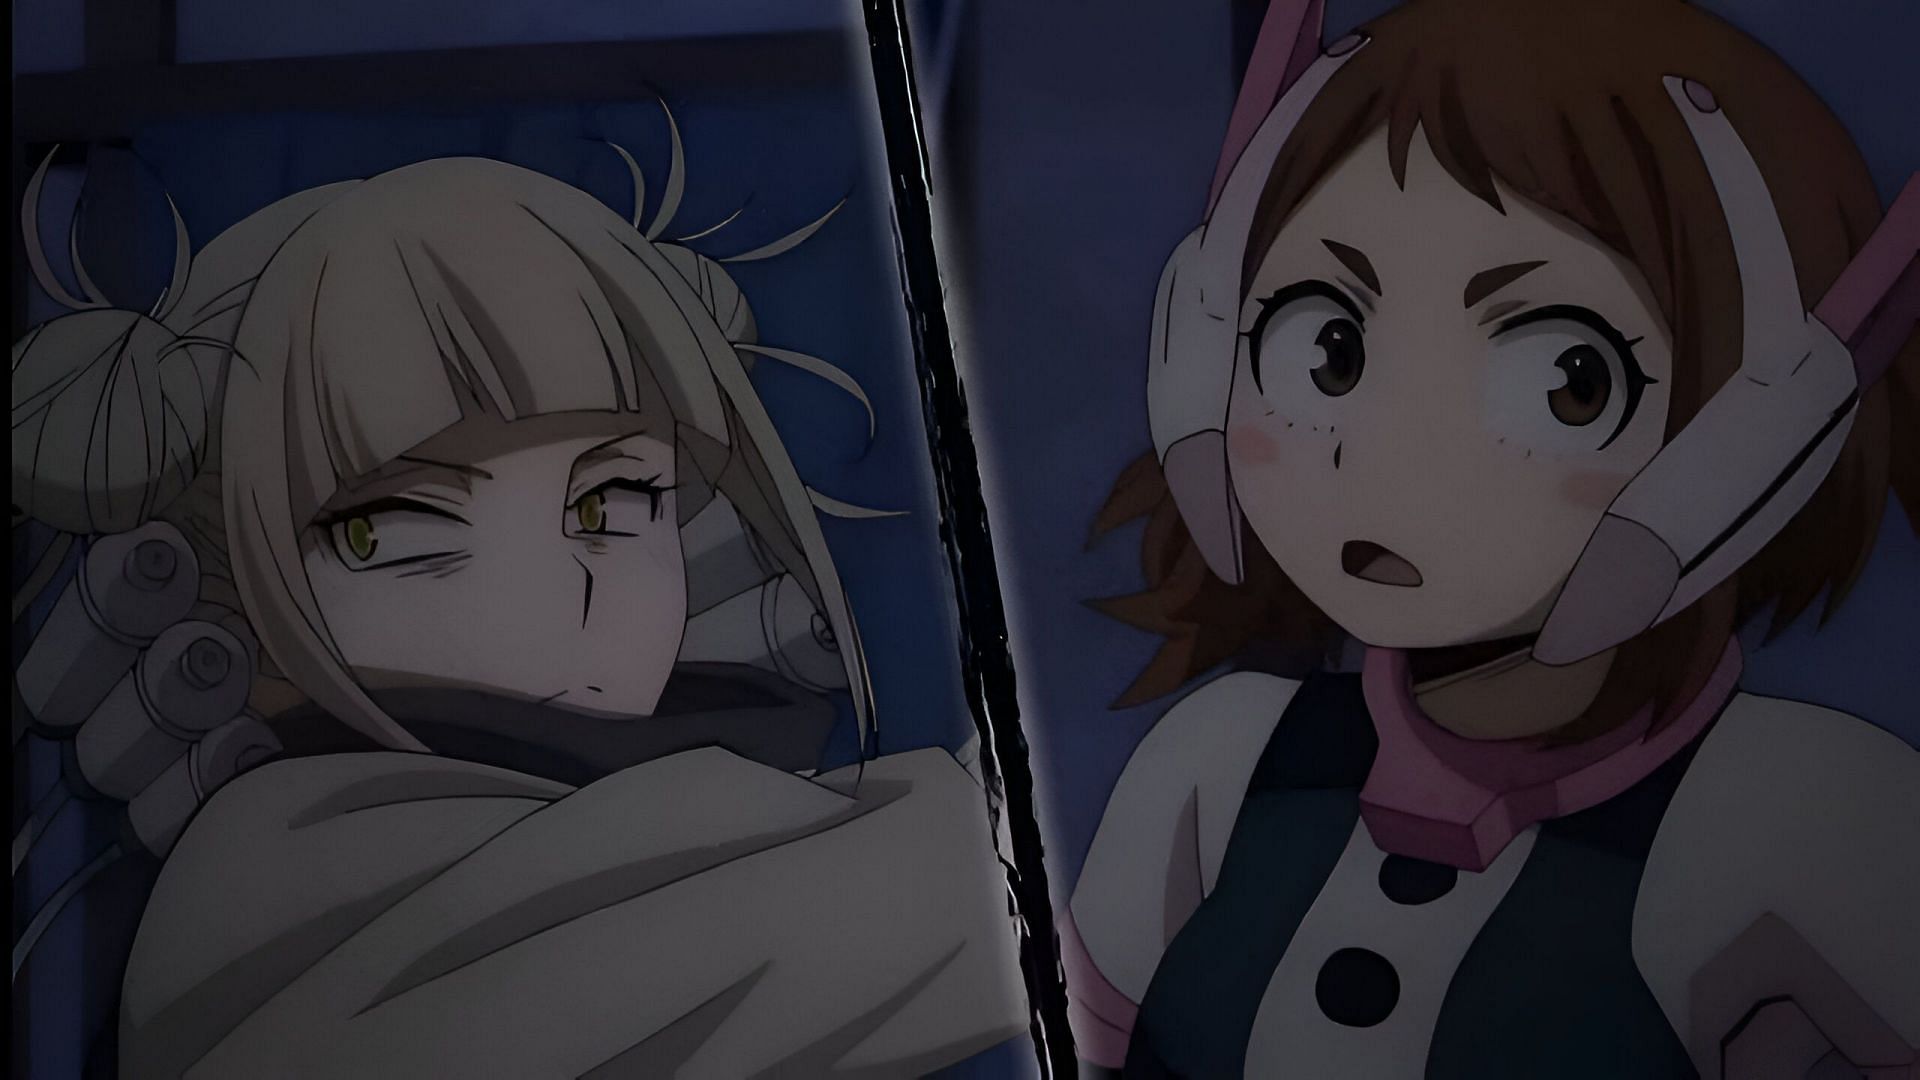 Toga (left) and Uraraka (right) as seen in the anime (Image via Bones)